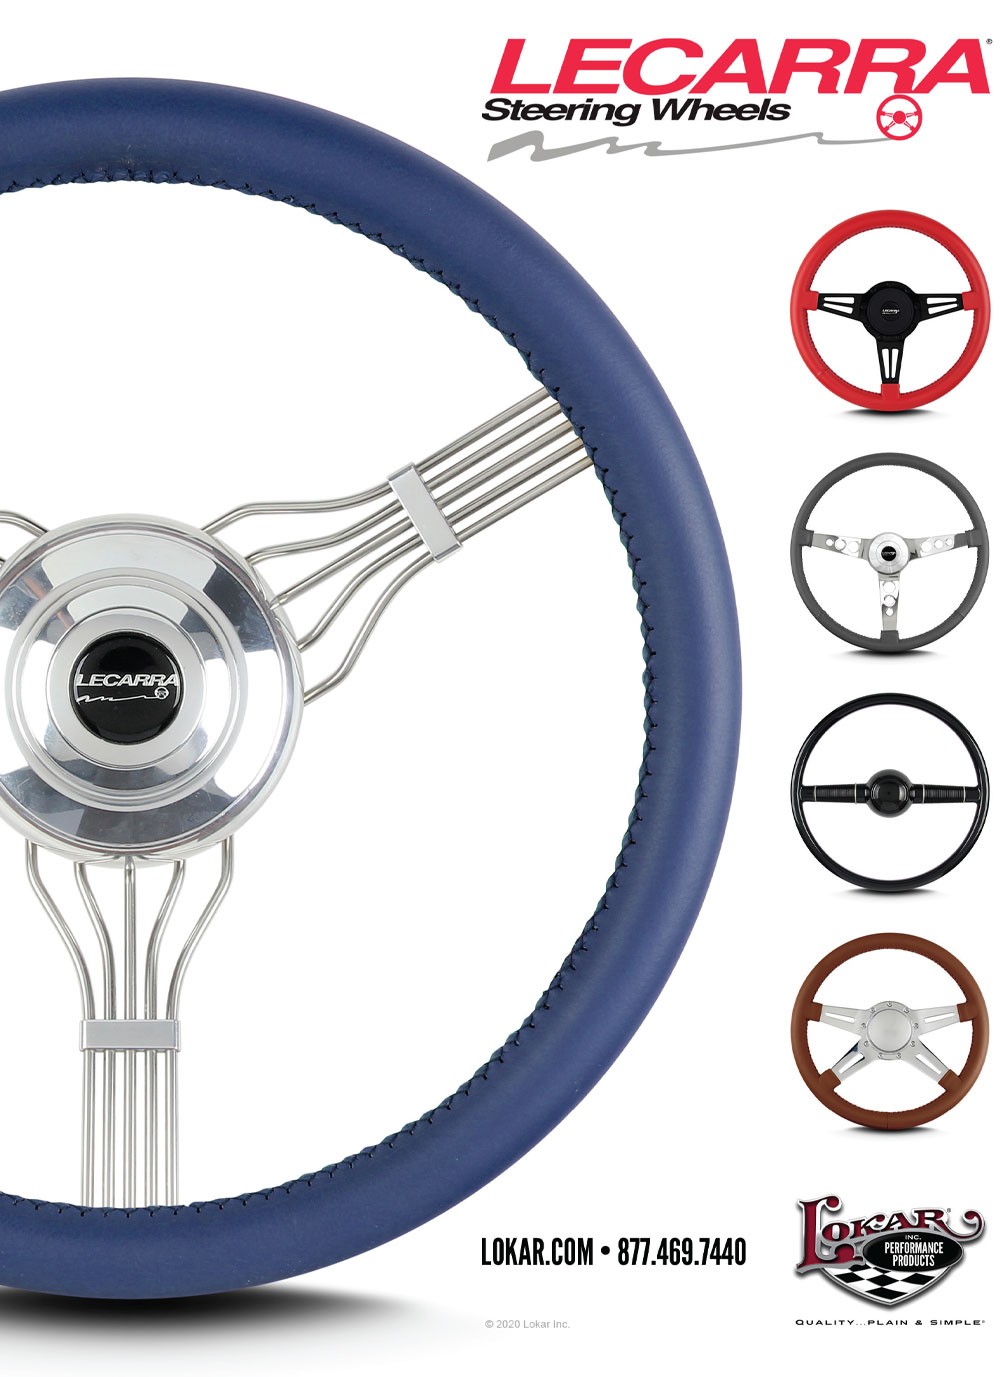 Lokar Lecarra Steering Wheels Advertisement